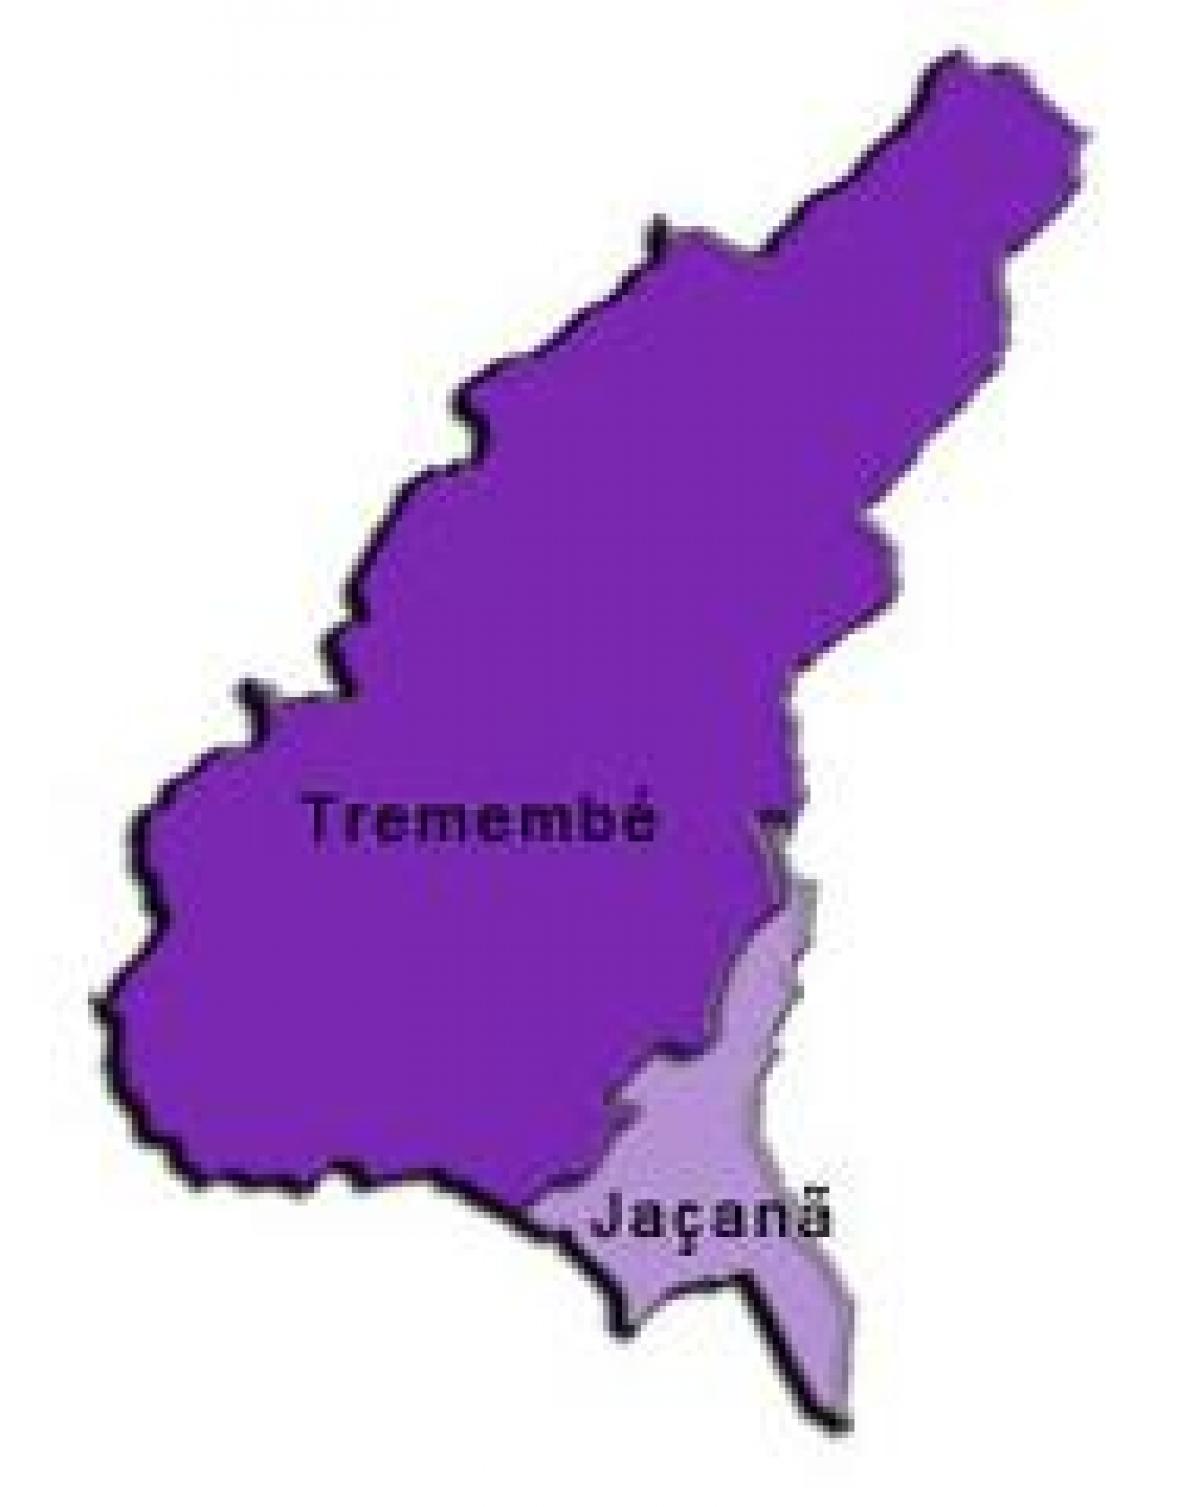 Bản đồ của Jaçanã-Tremembé phụ tỉnh